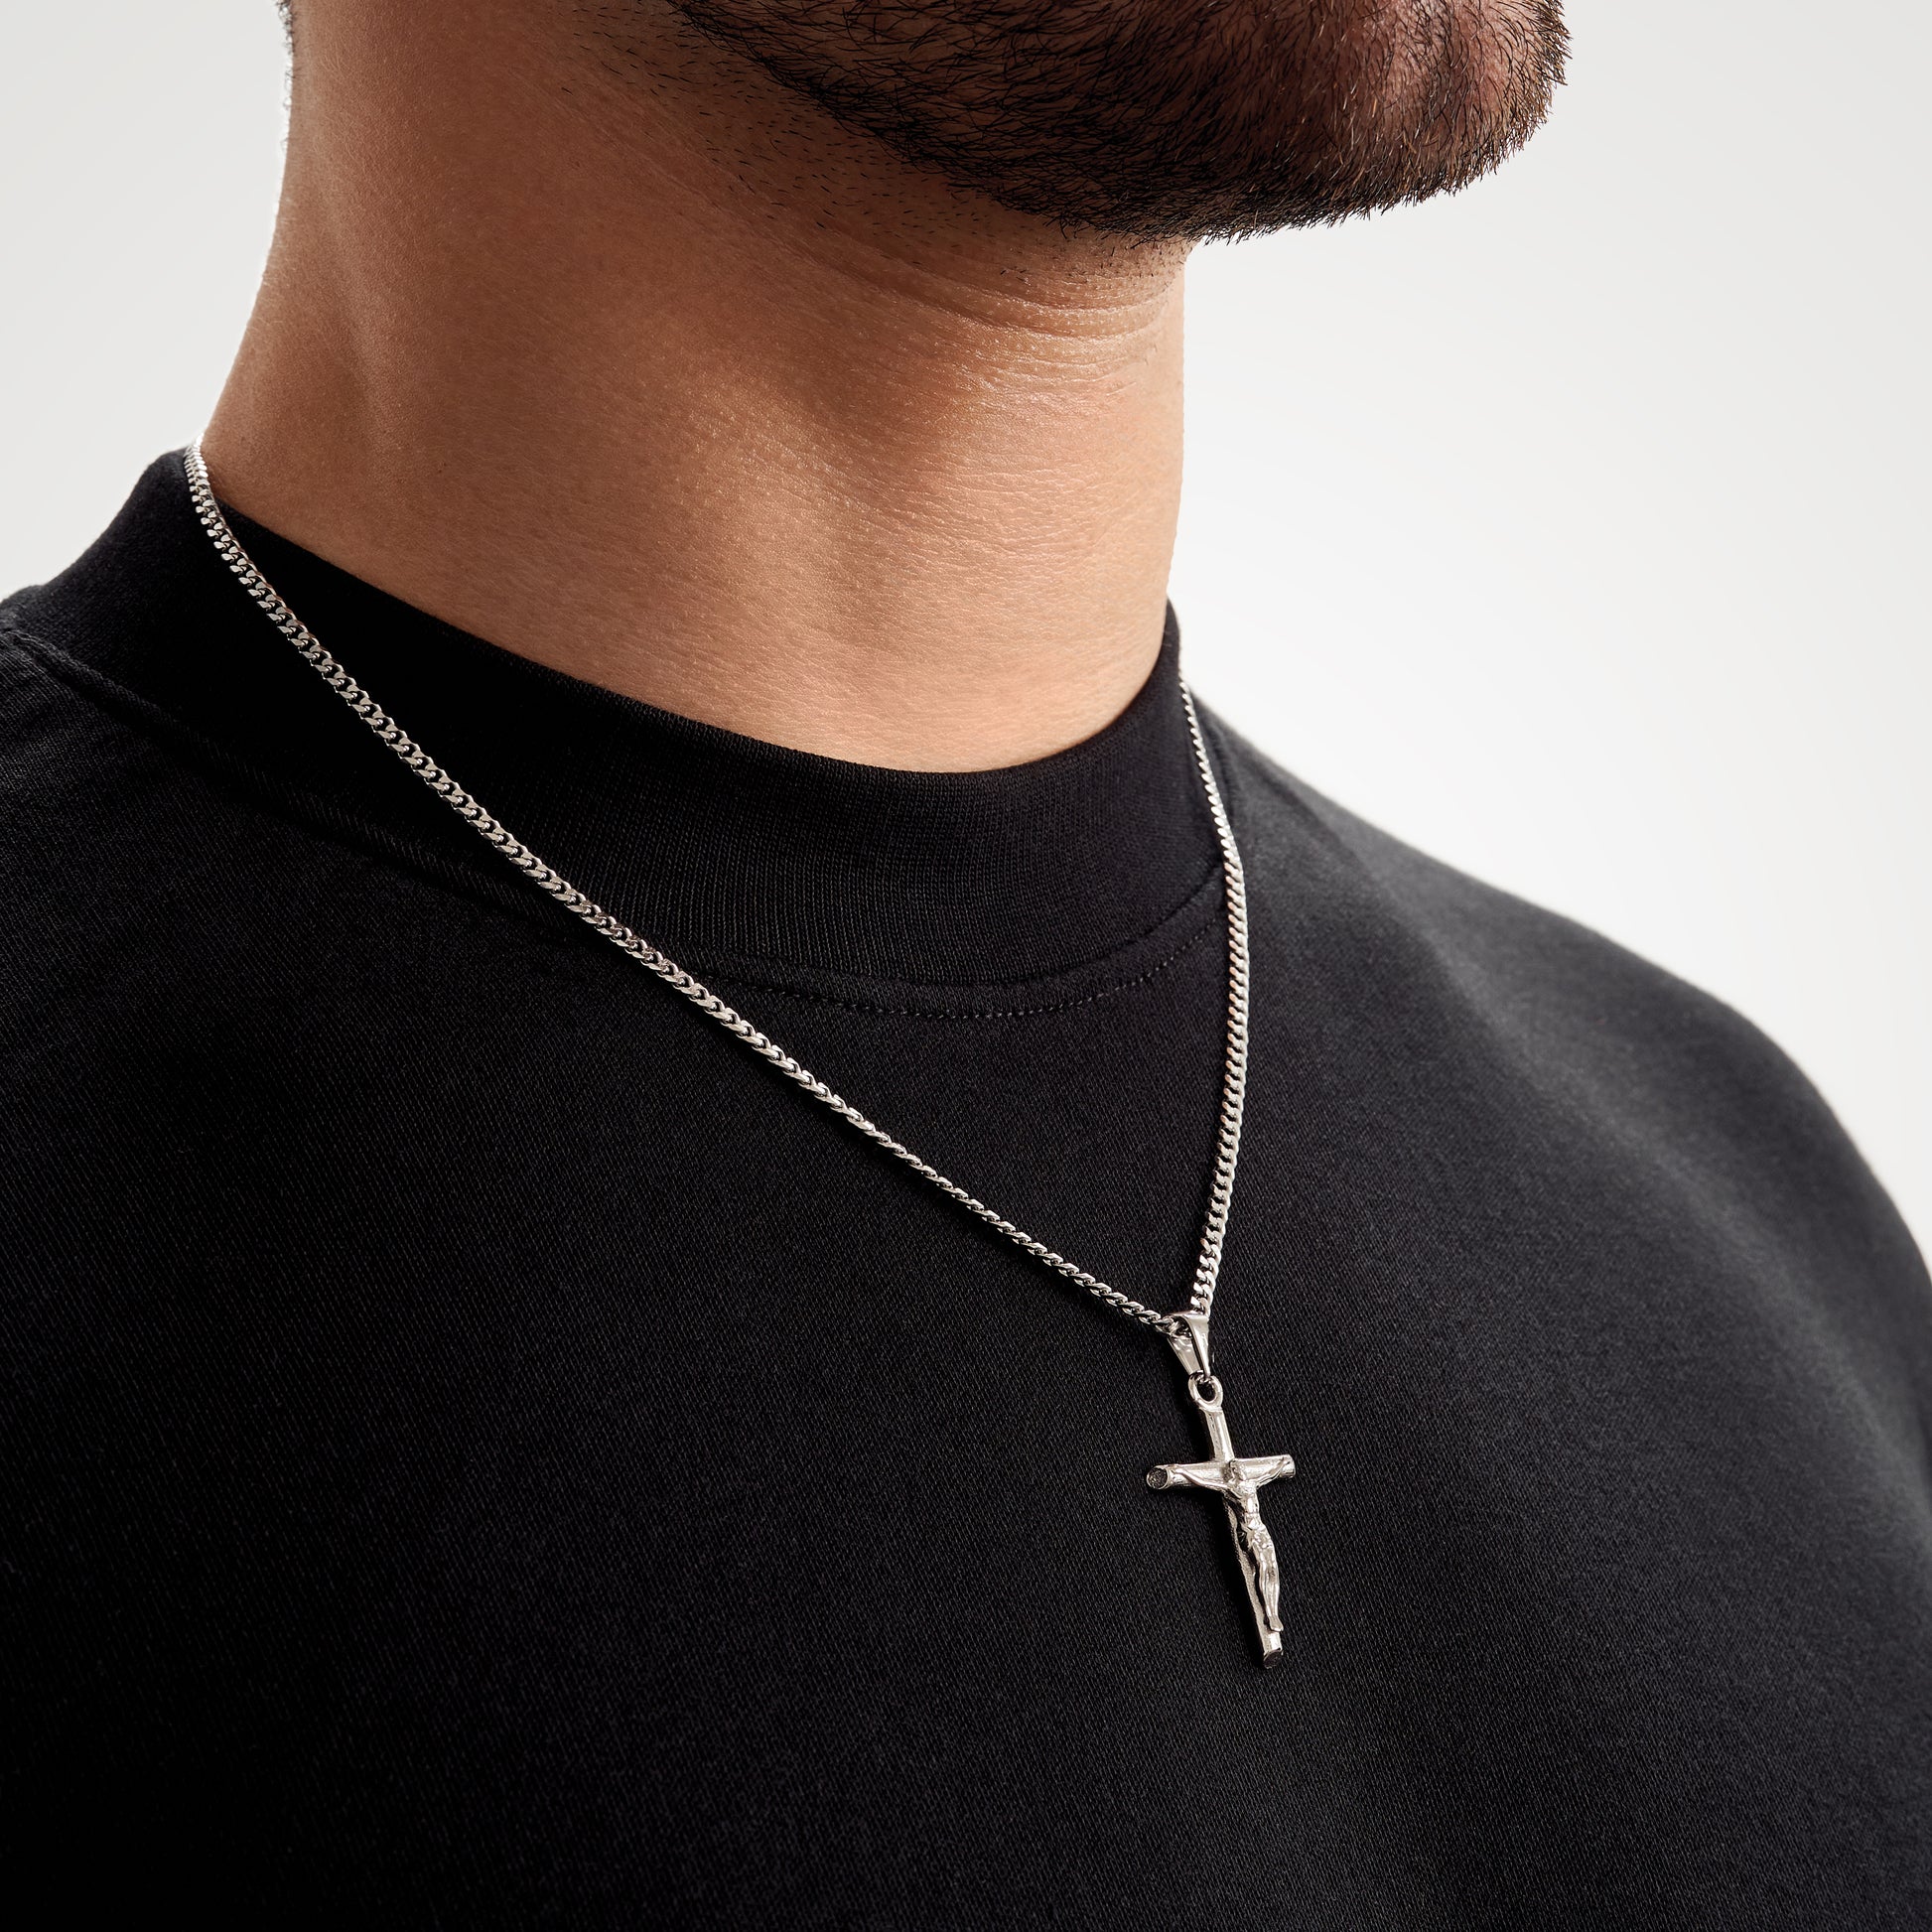 silver cross necklace men's jewellery pendant